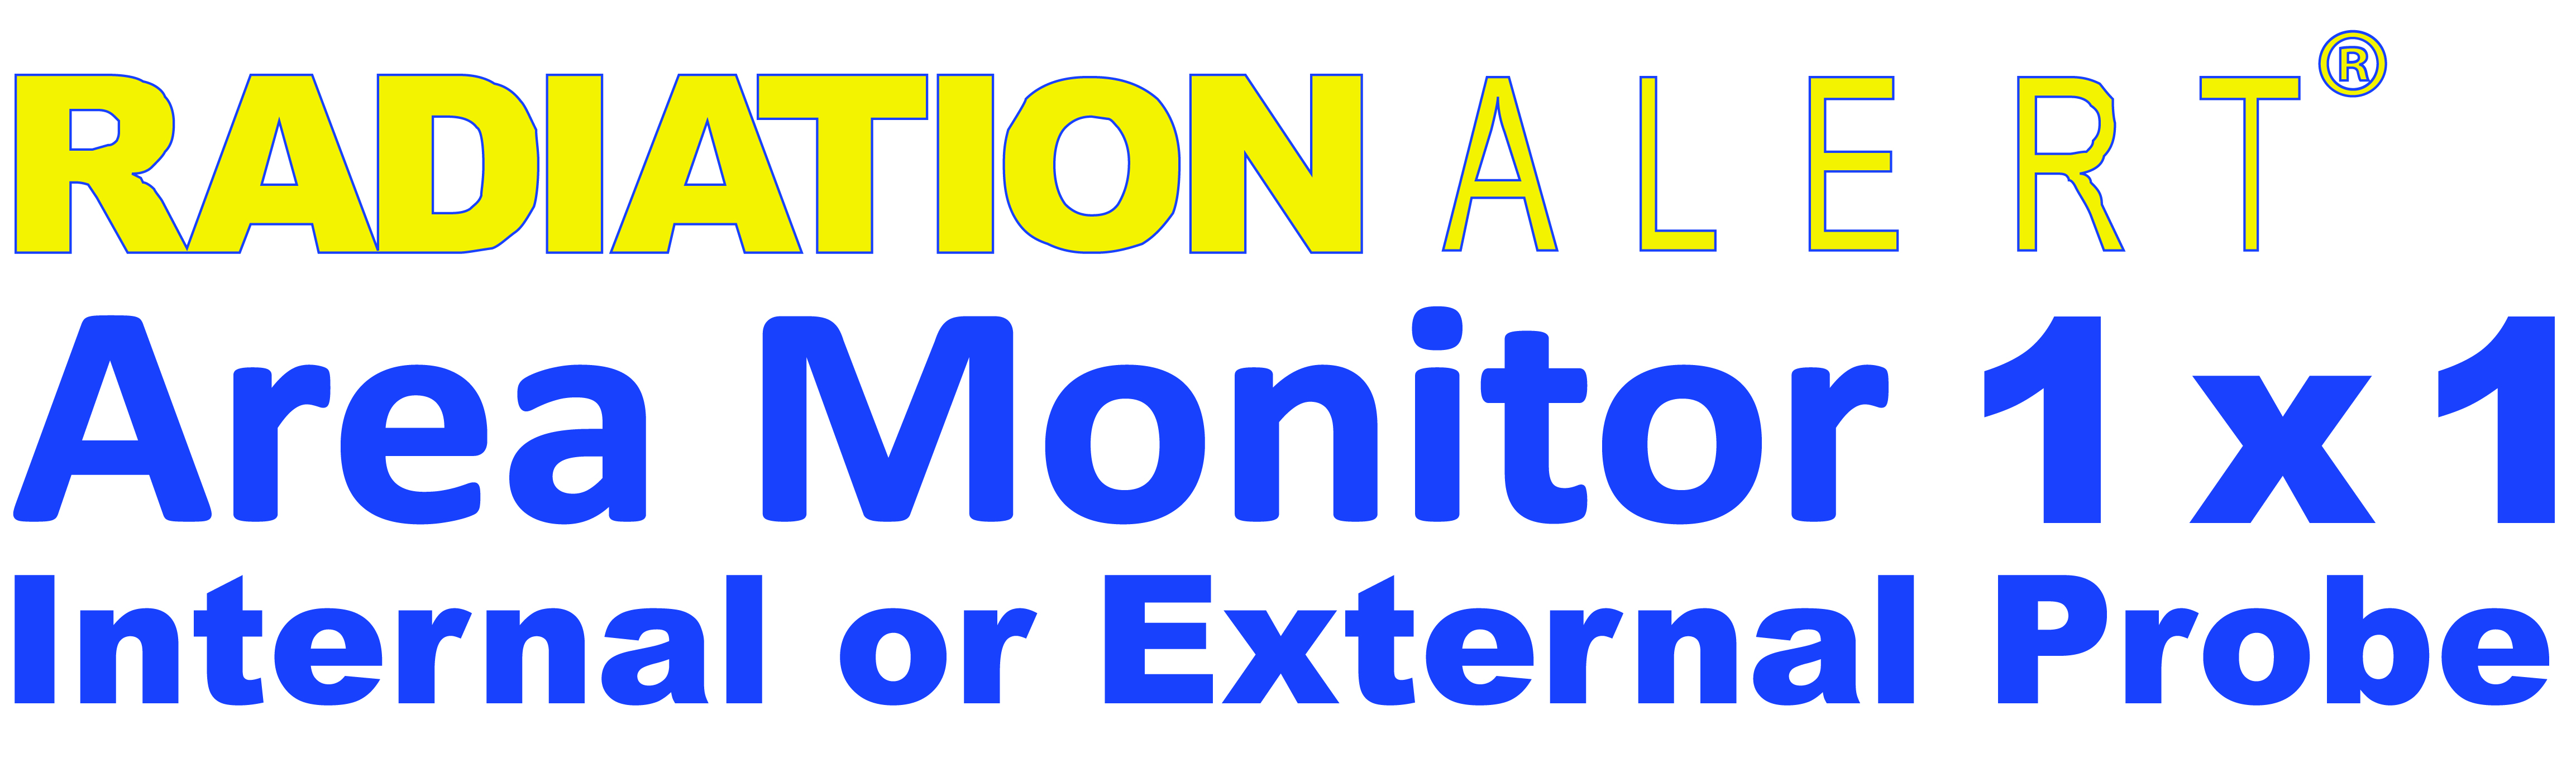 AM-1X1 Radiation Area Monitor